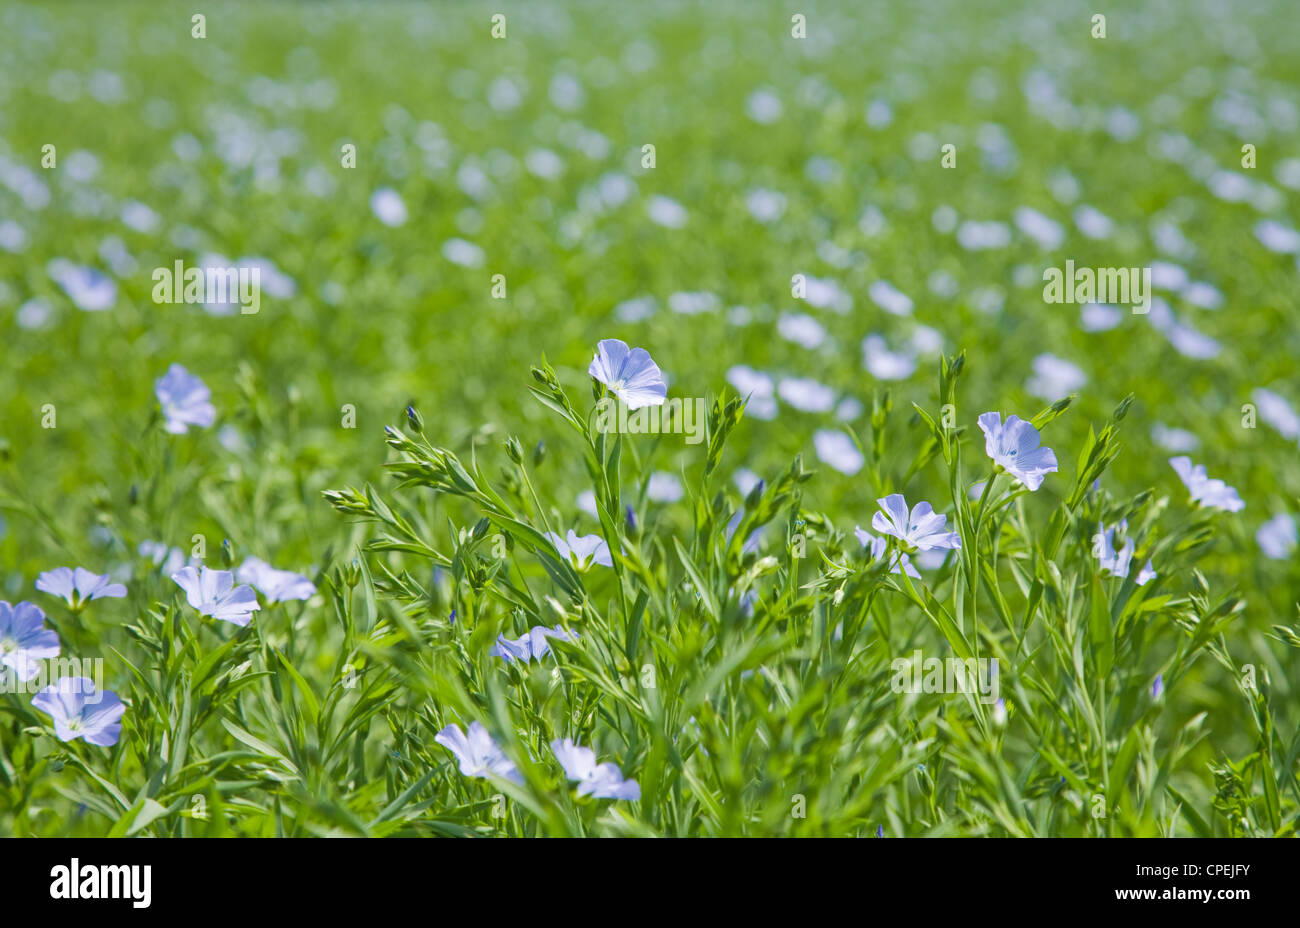 flax plants Linum usitatissimum blue flowers Stock Photo